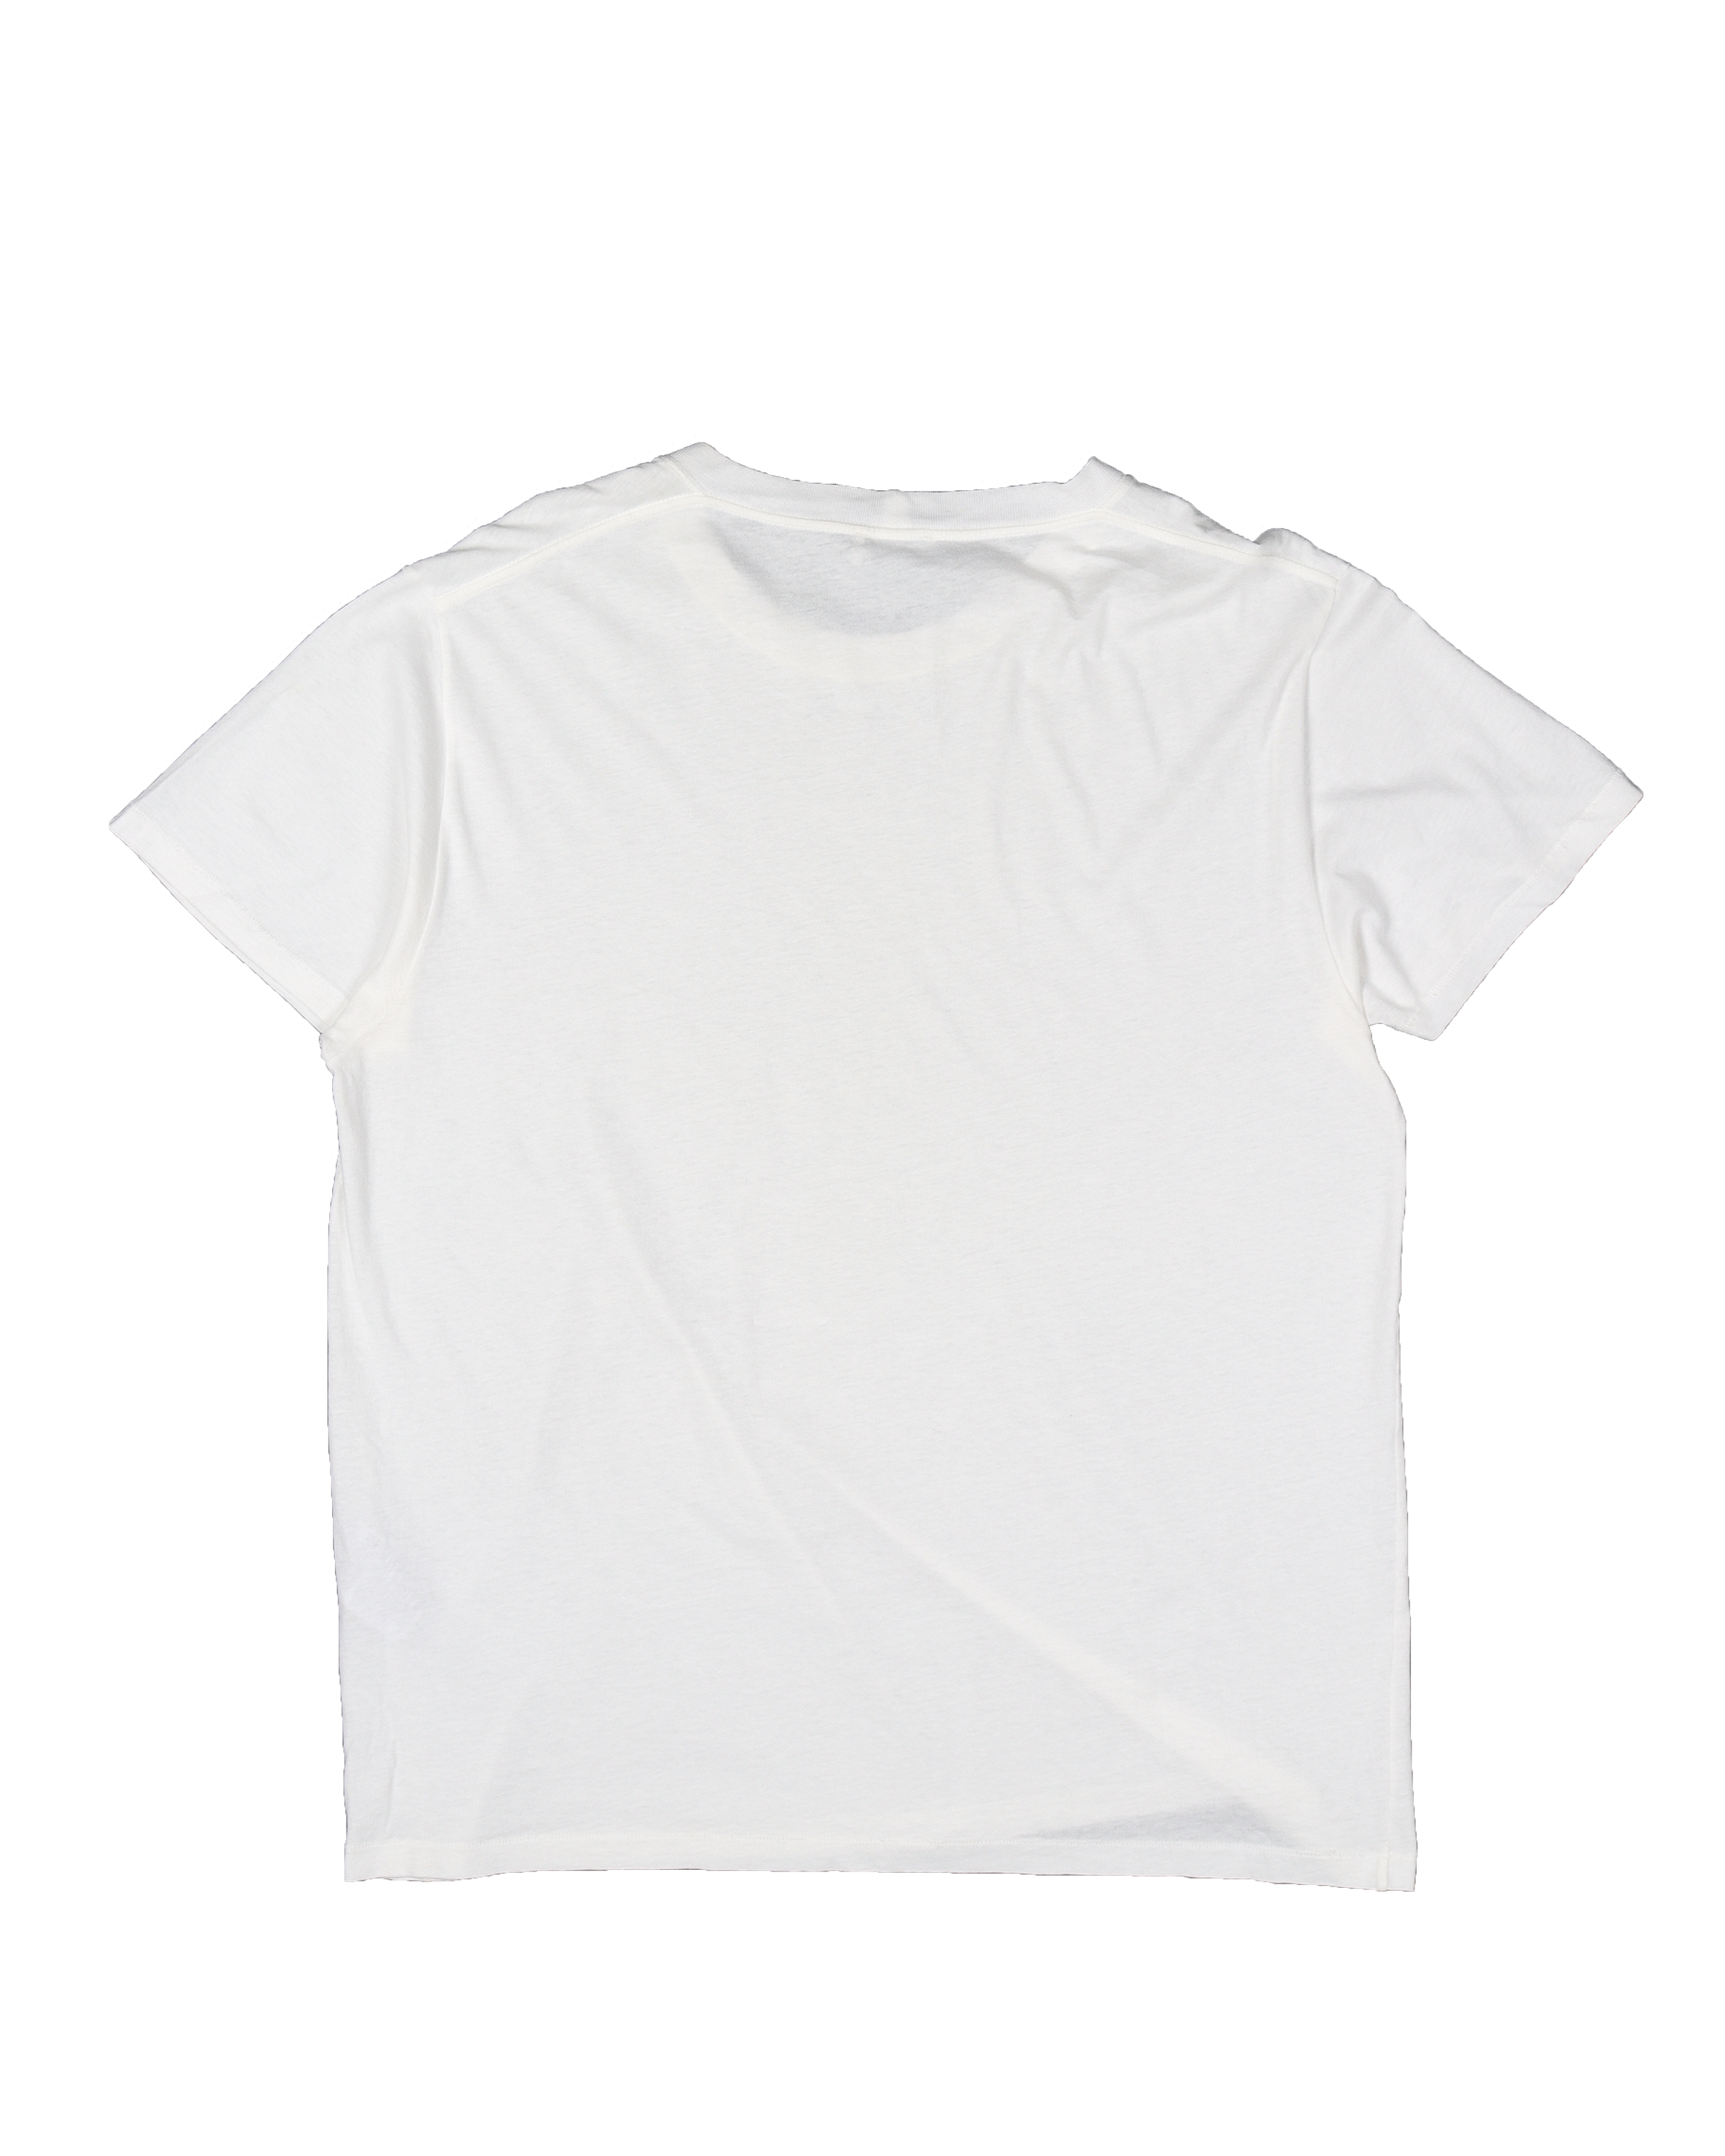 SS17 Stars T-Shirt